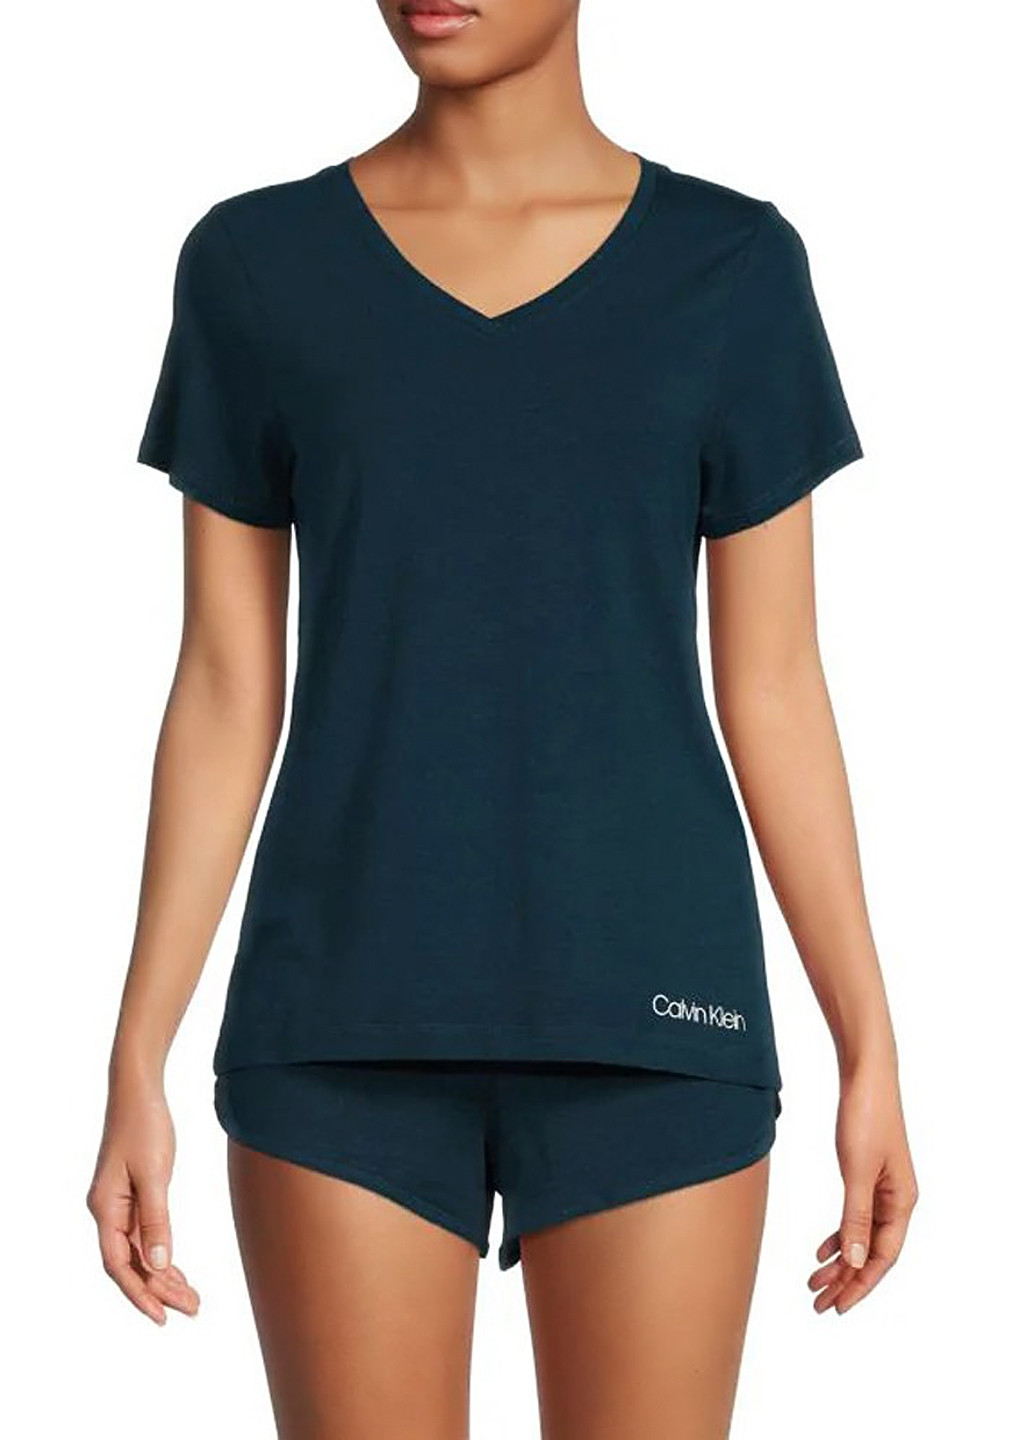 Темно-зеленая всесезон пижама (футболка, шорти) футболка + шорты Calvin Klein